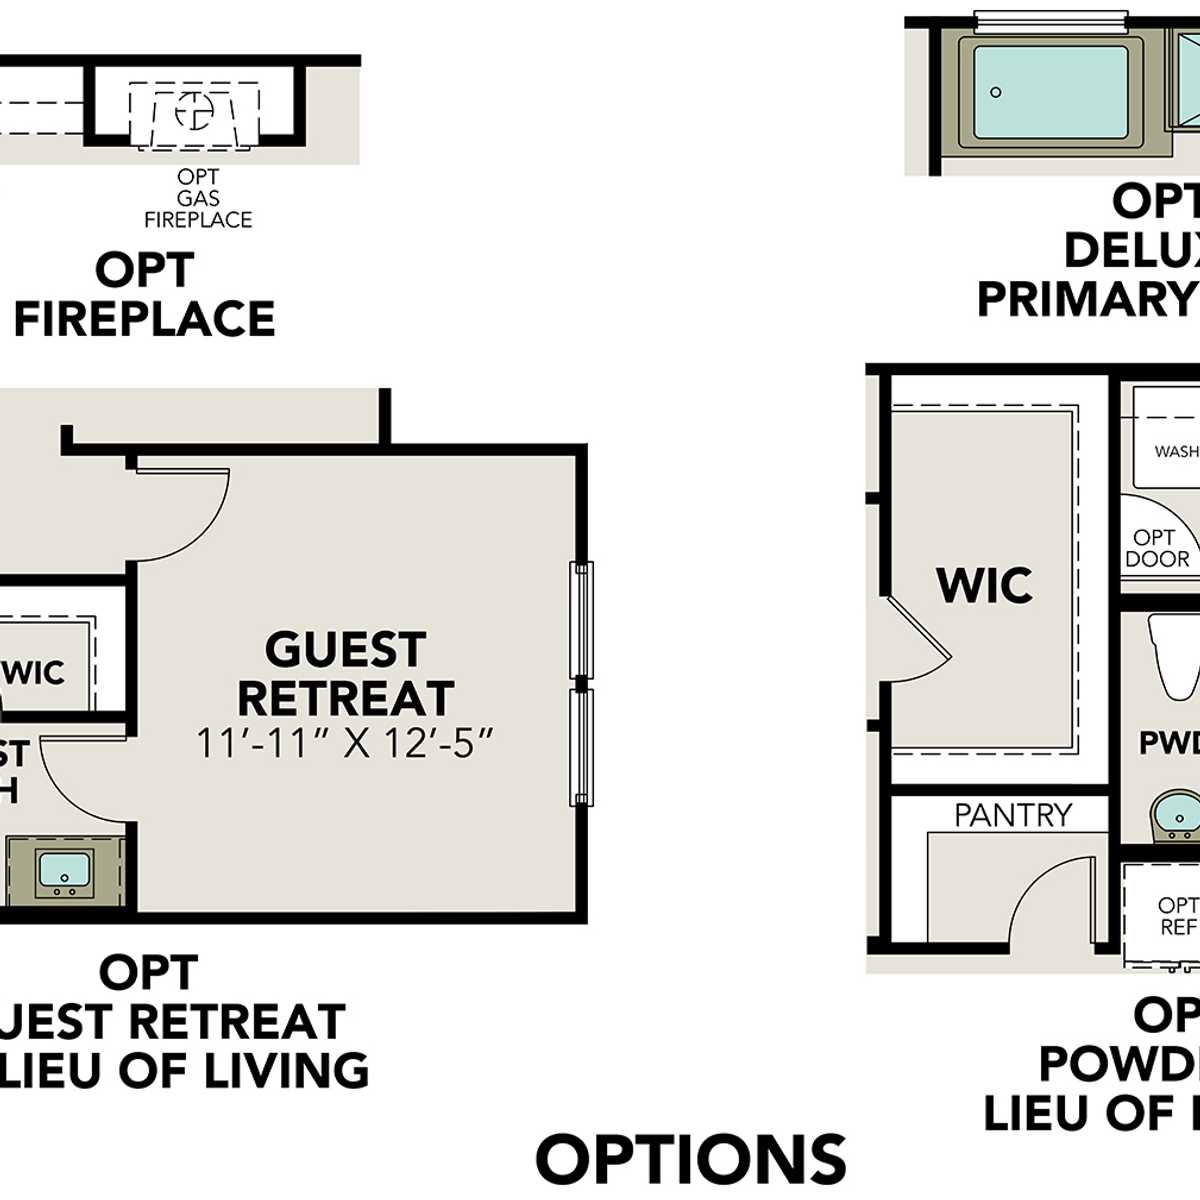 2 - The Lanier G floor plan layout for 149 Mason Lane in Davidson Homes' The Reserve at Potranco Oaks community.